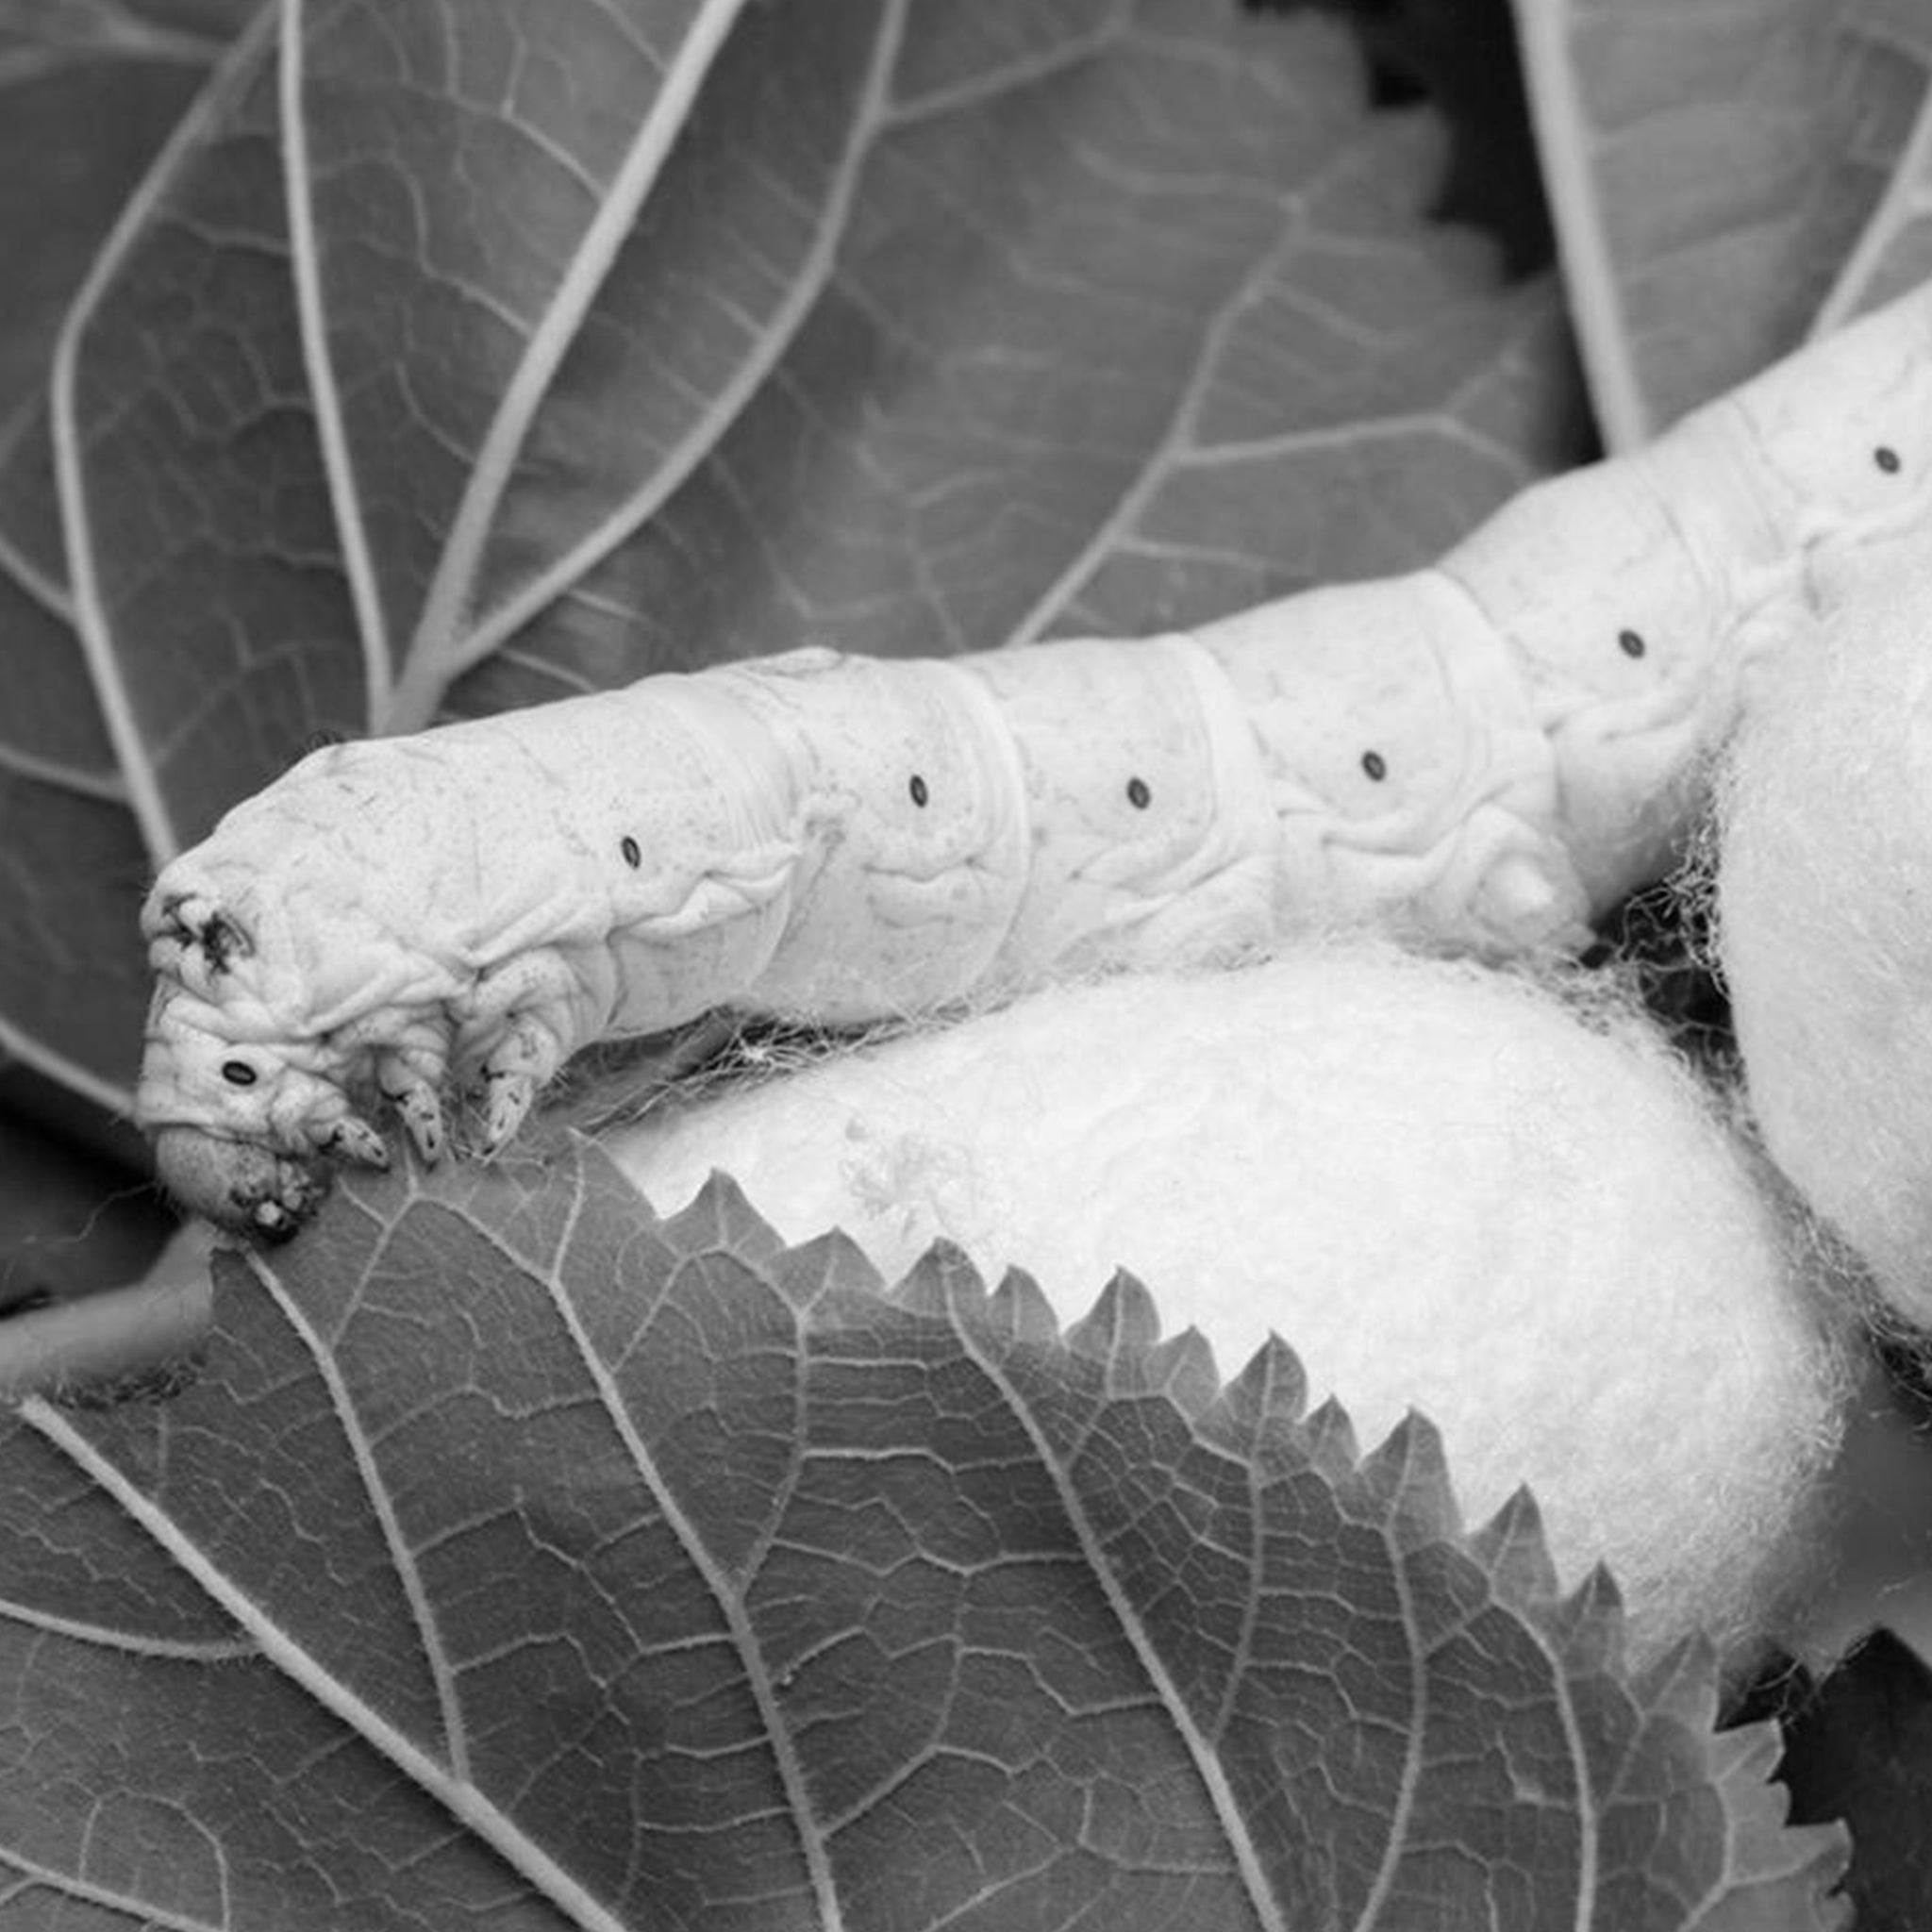 Silkworm cocoon extract